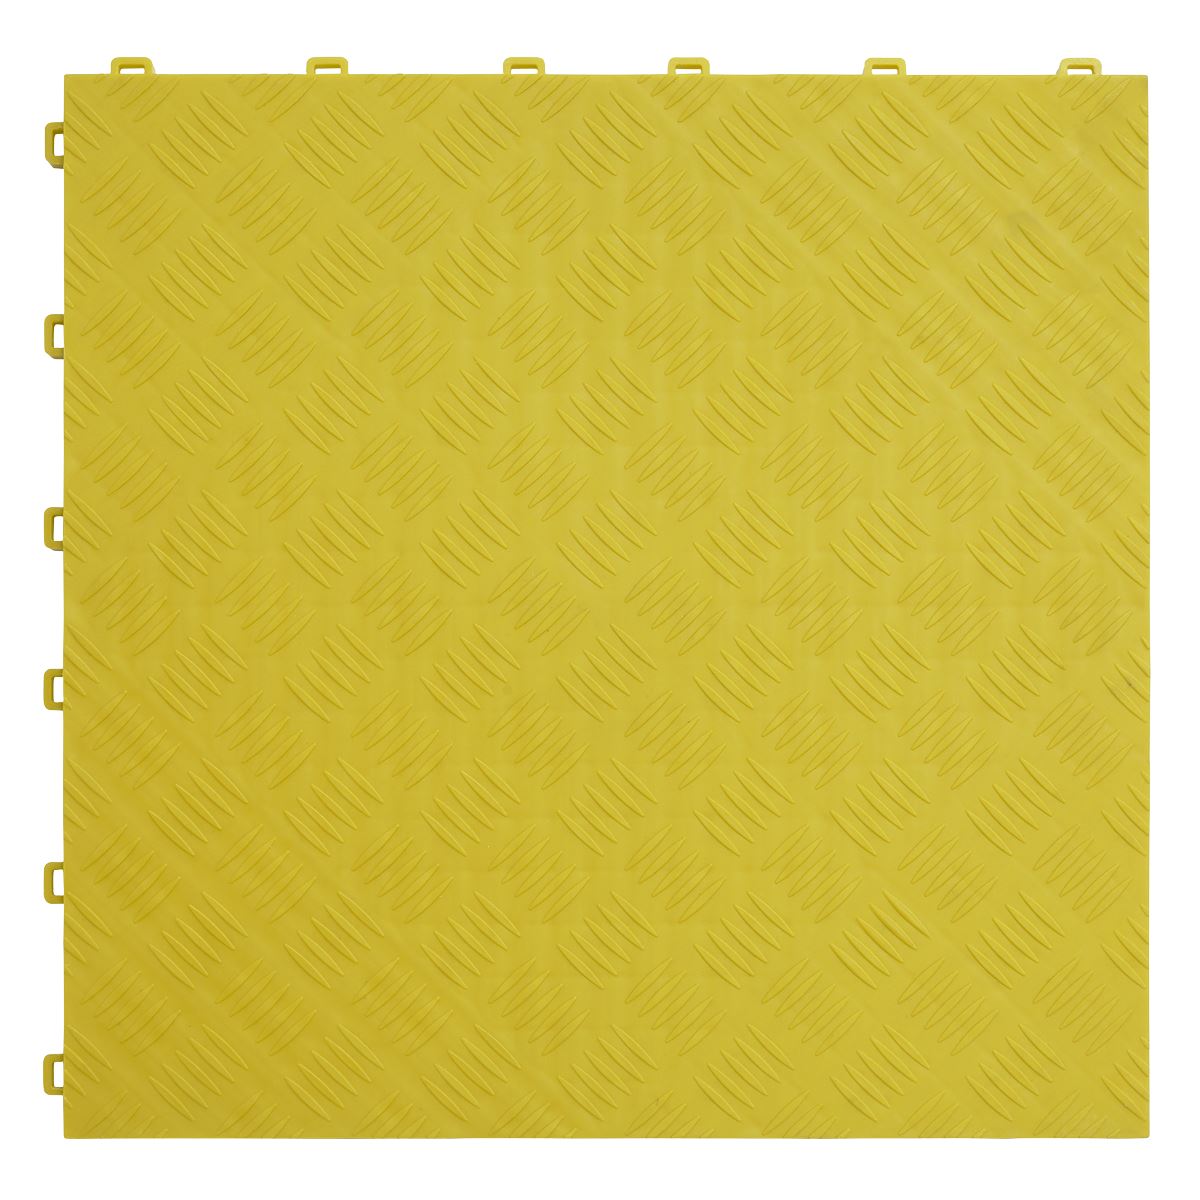 Sealey Polypropylene Floor Tile - Yellow Treadplate 400 x 400mm - Pack of 9